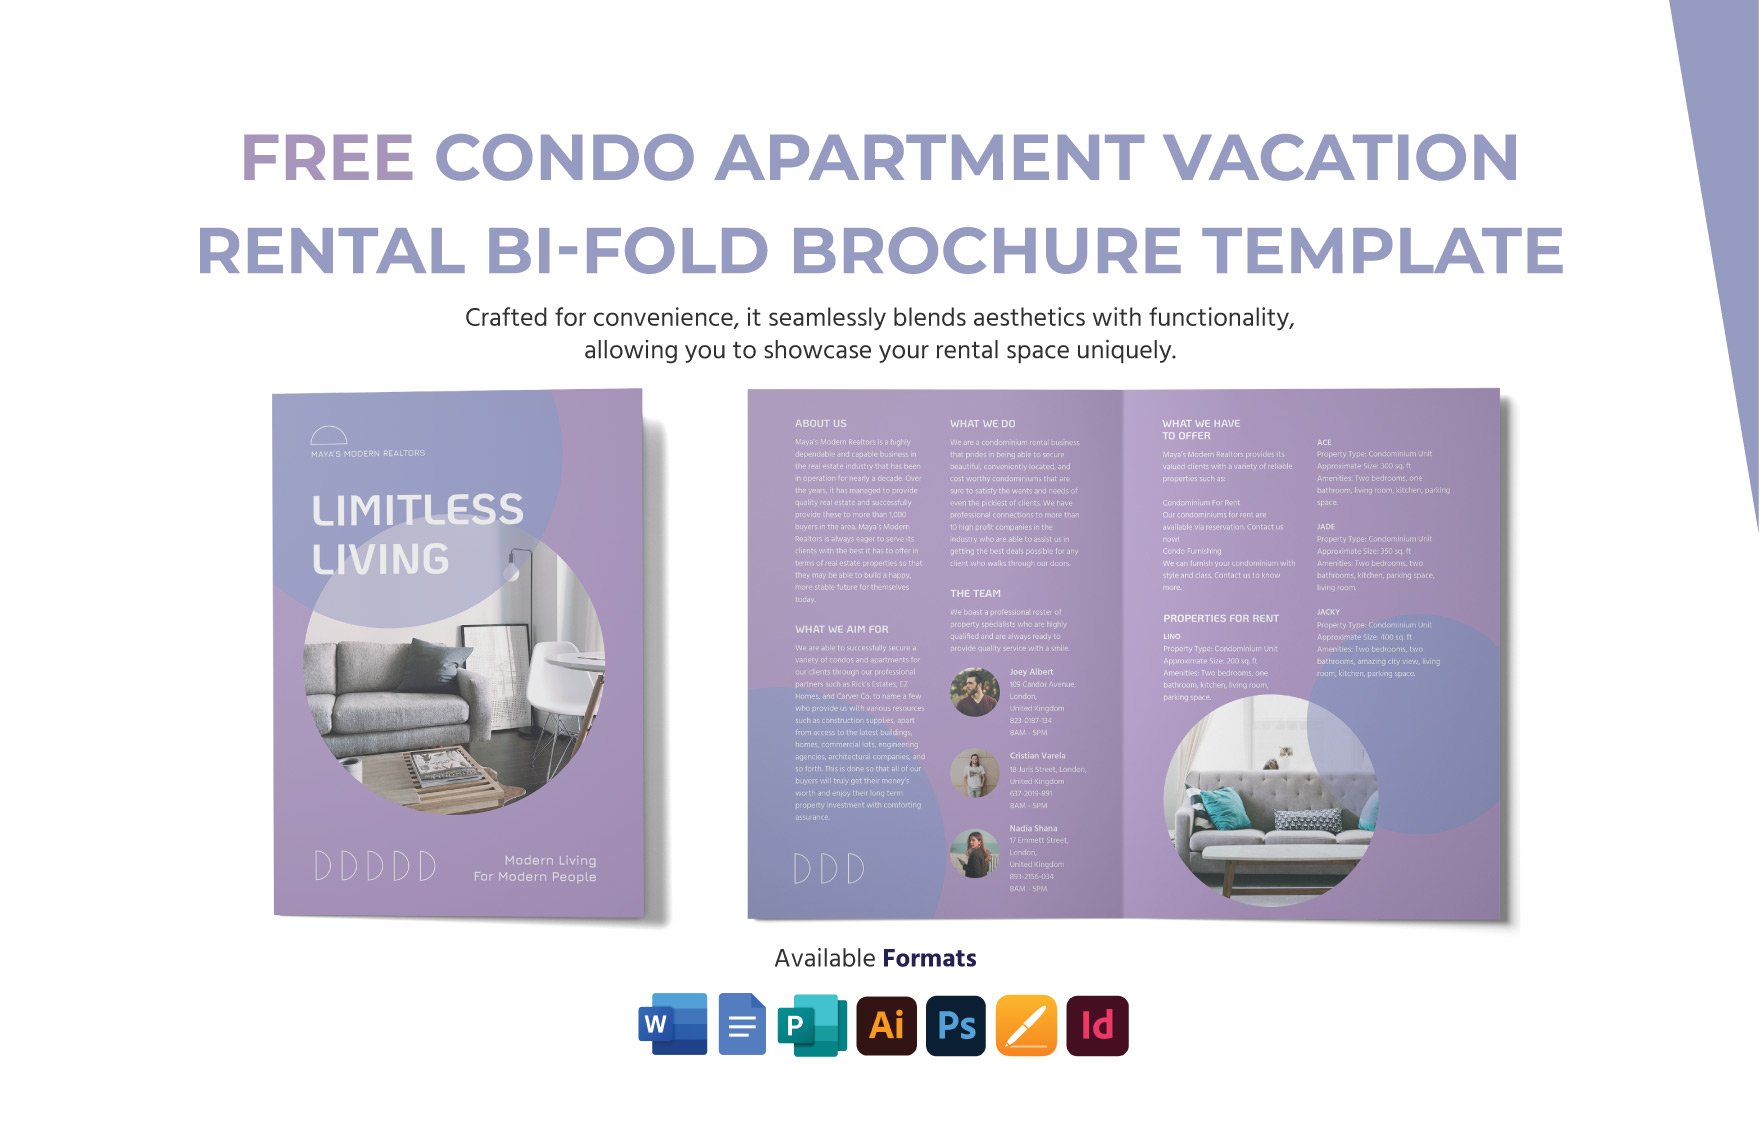 Condo Apartment Vacation Rental Bi-Fold Brochure Template